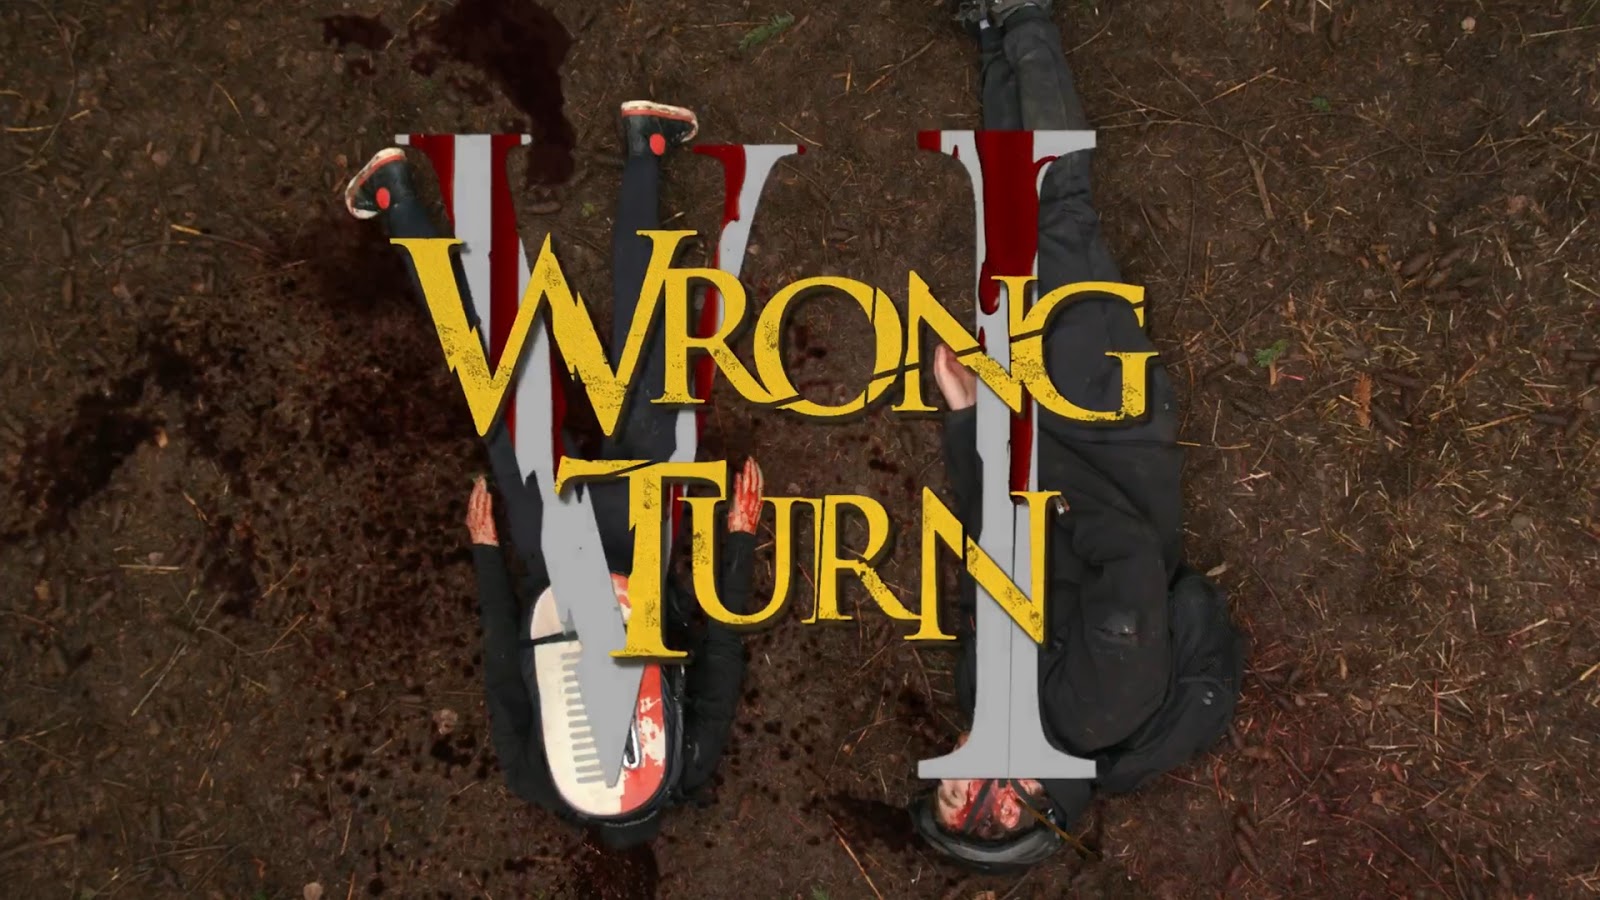 Wrong Turn VI Last Resort (2014)|1080p|Latino